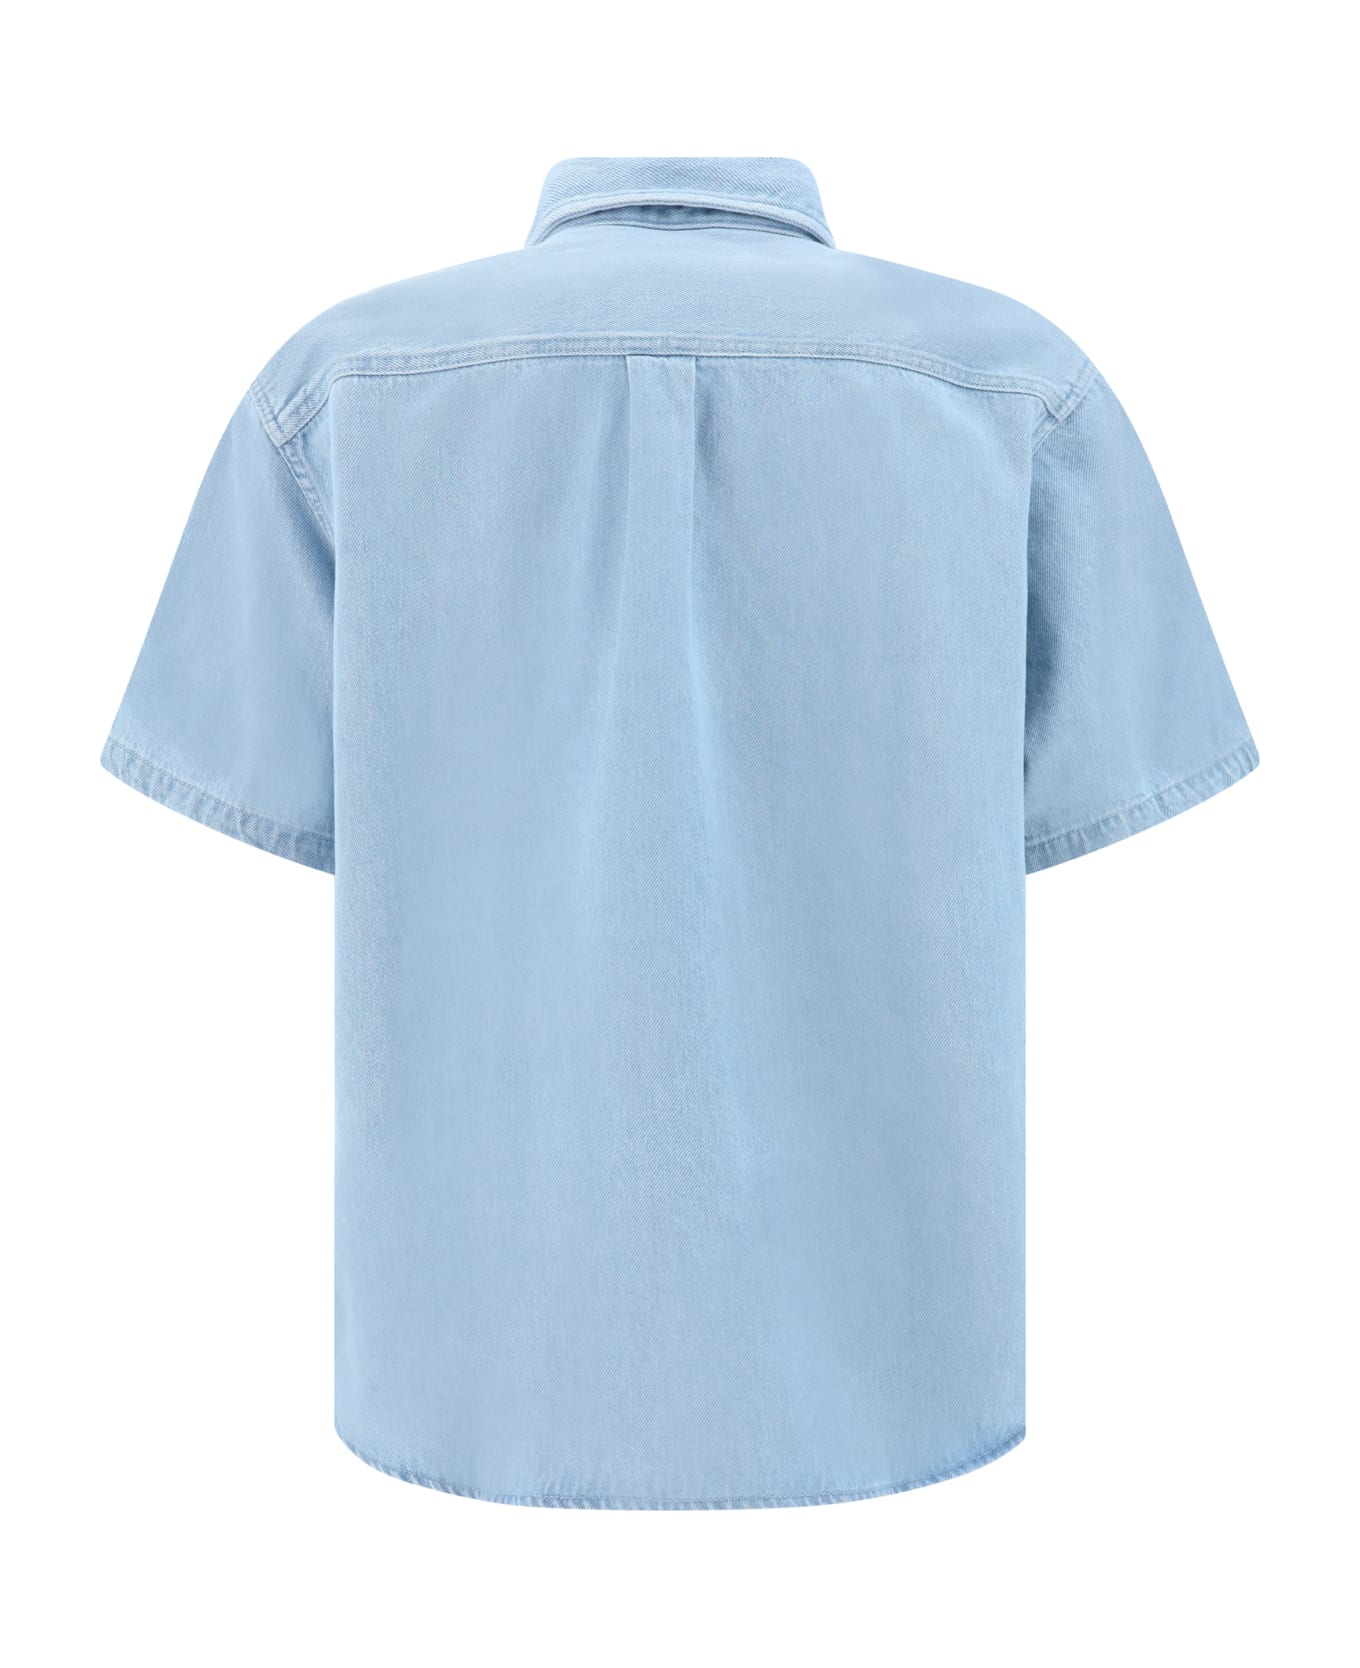 Carhartt Ody Denim Shirt - Blue